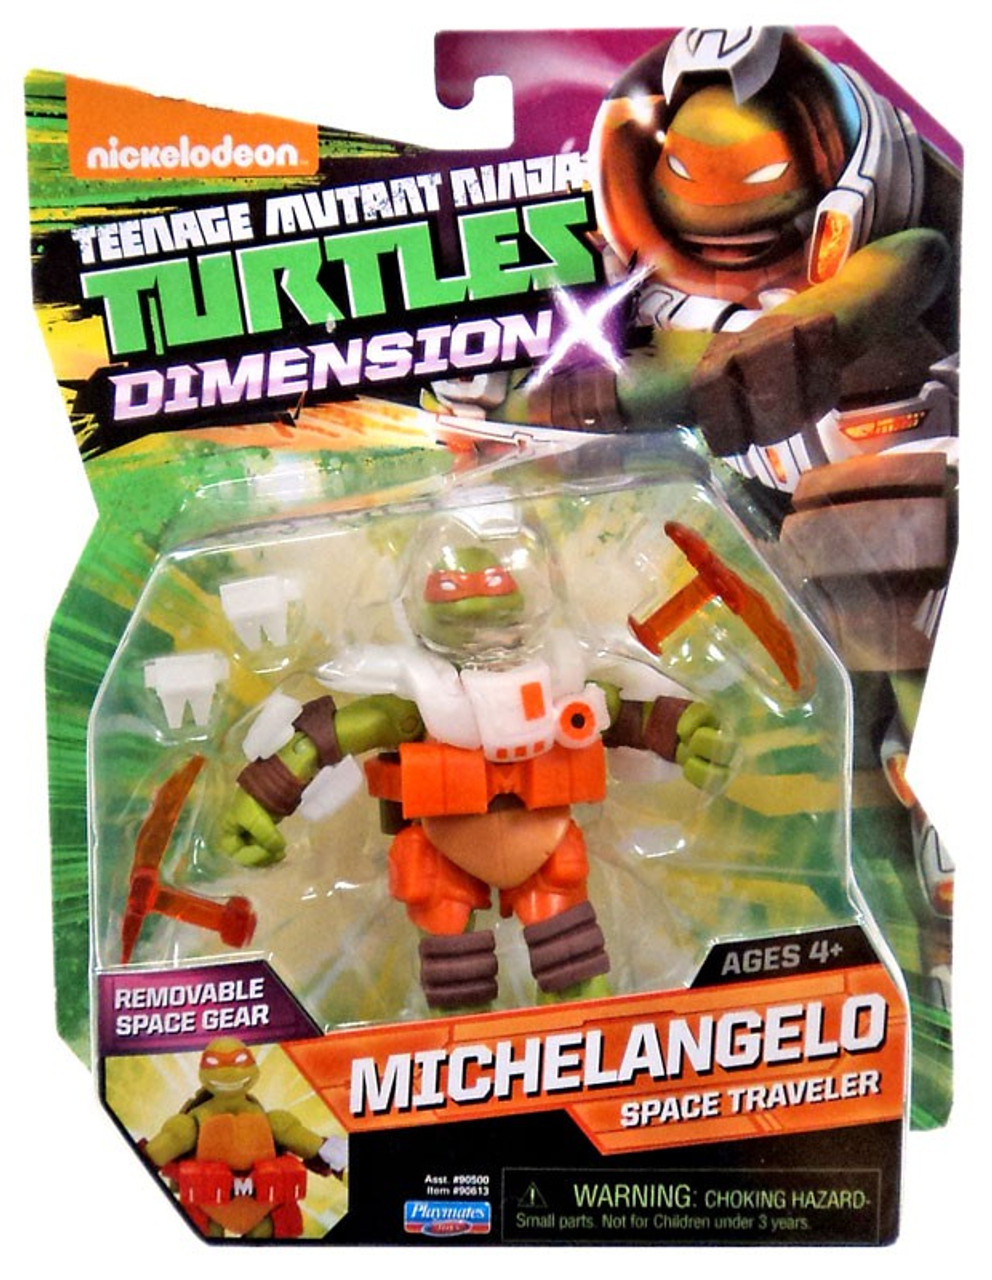 Teenage Mutant Ninja Turtles Nickelodeon Dimension X Michelangelo 5 ... - Teenage Mutant Ninja Turtles NickeloDeon Dimension X Michelangelo 5 Action Figure Space Traveler Playmates 9  18649.1461387126